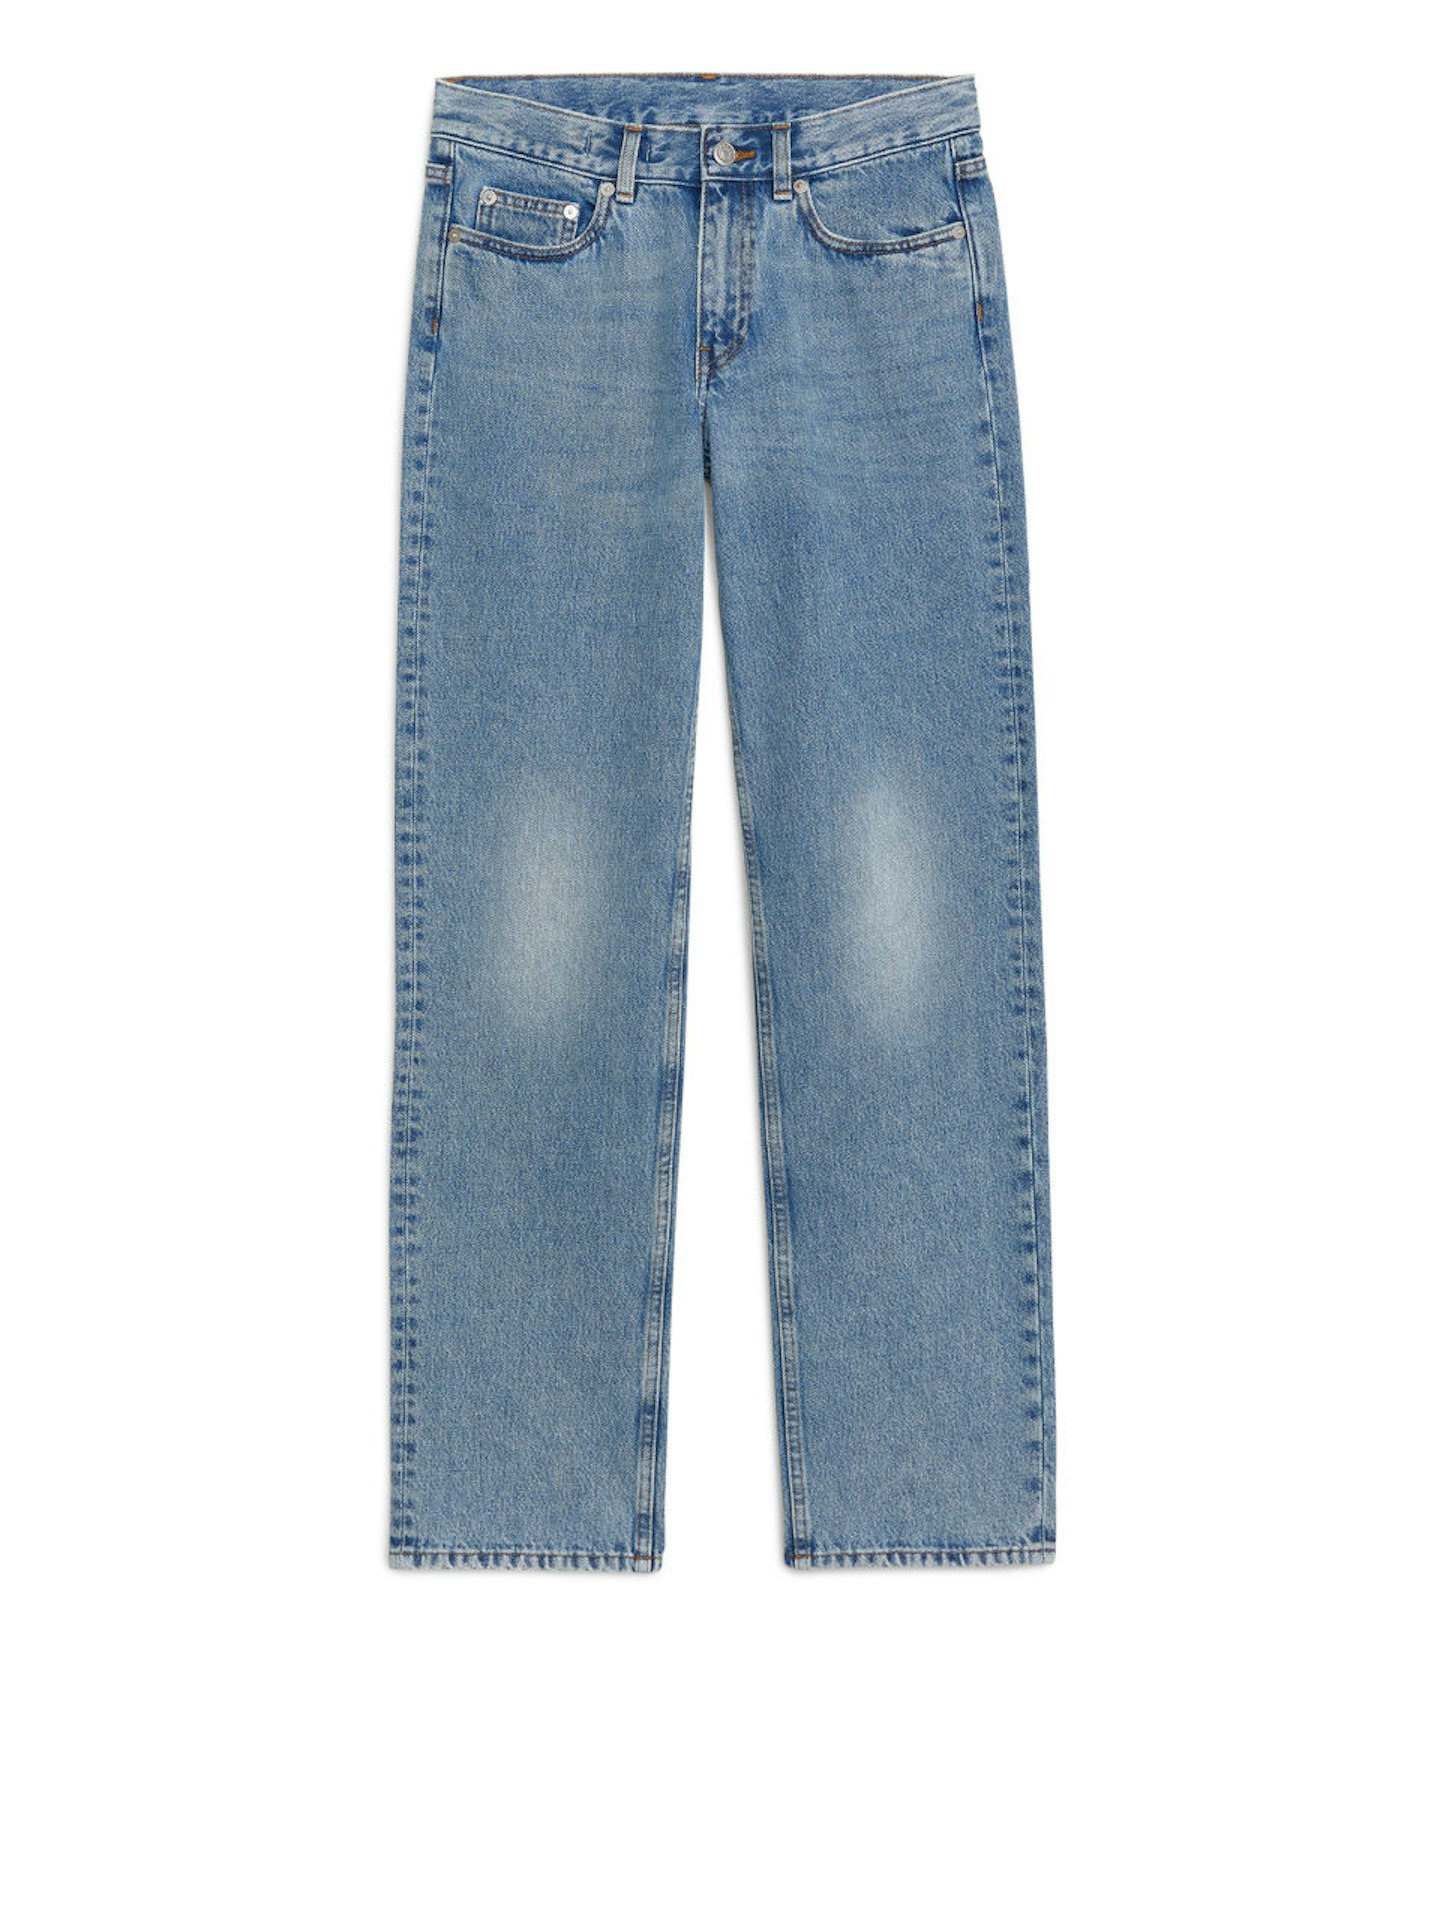 Arket, Straight Leg Jeans, £59